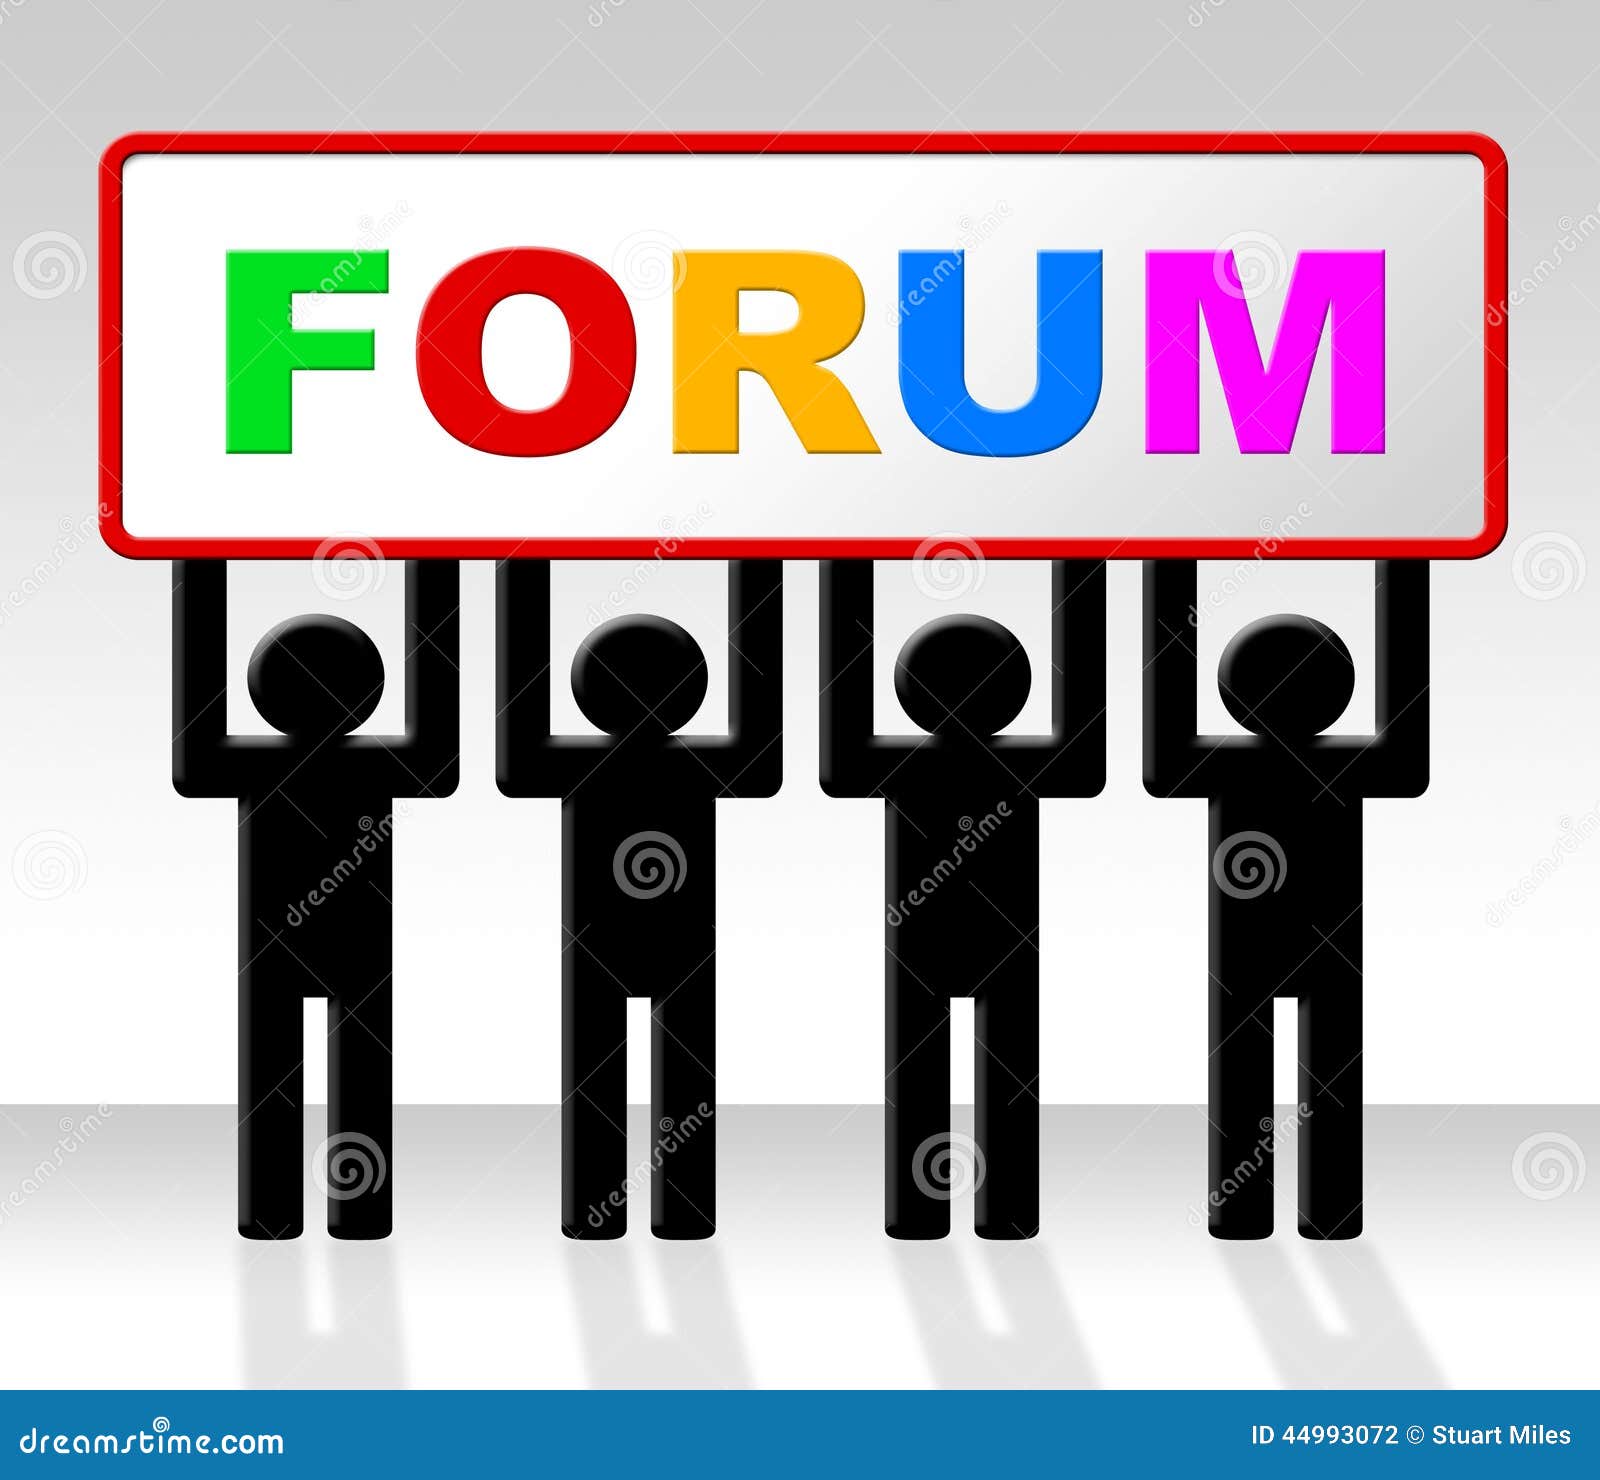 forum forums represents social media and website